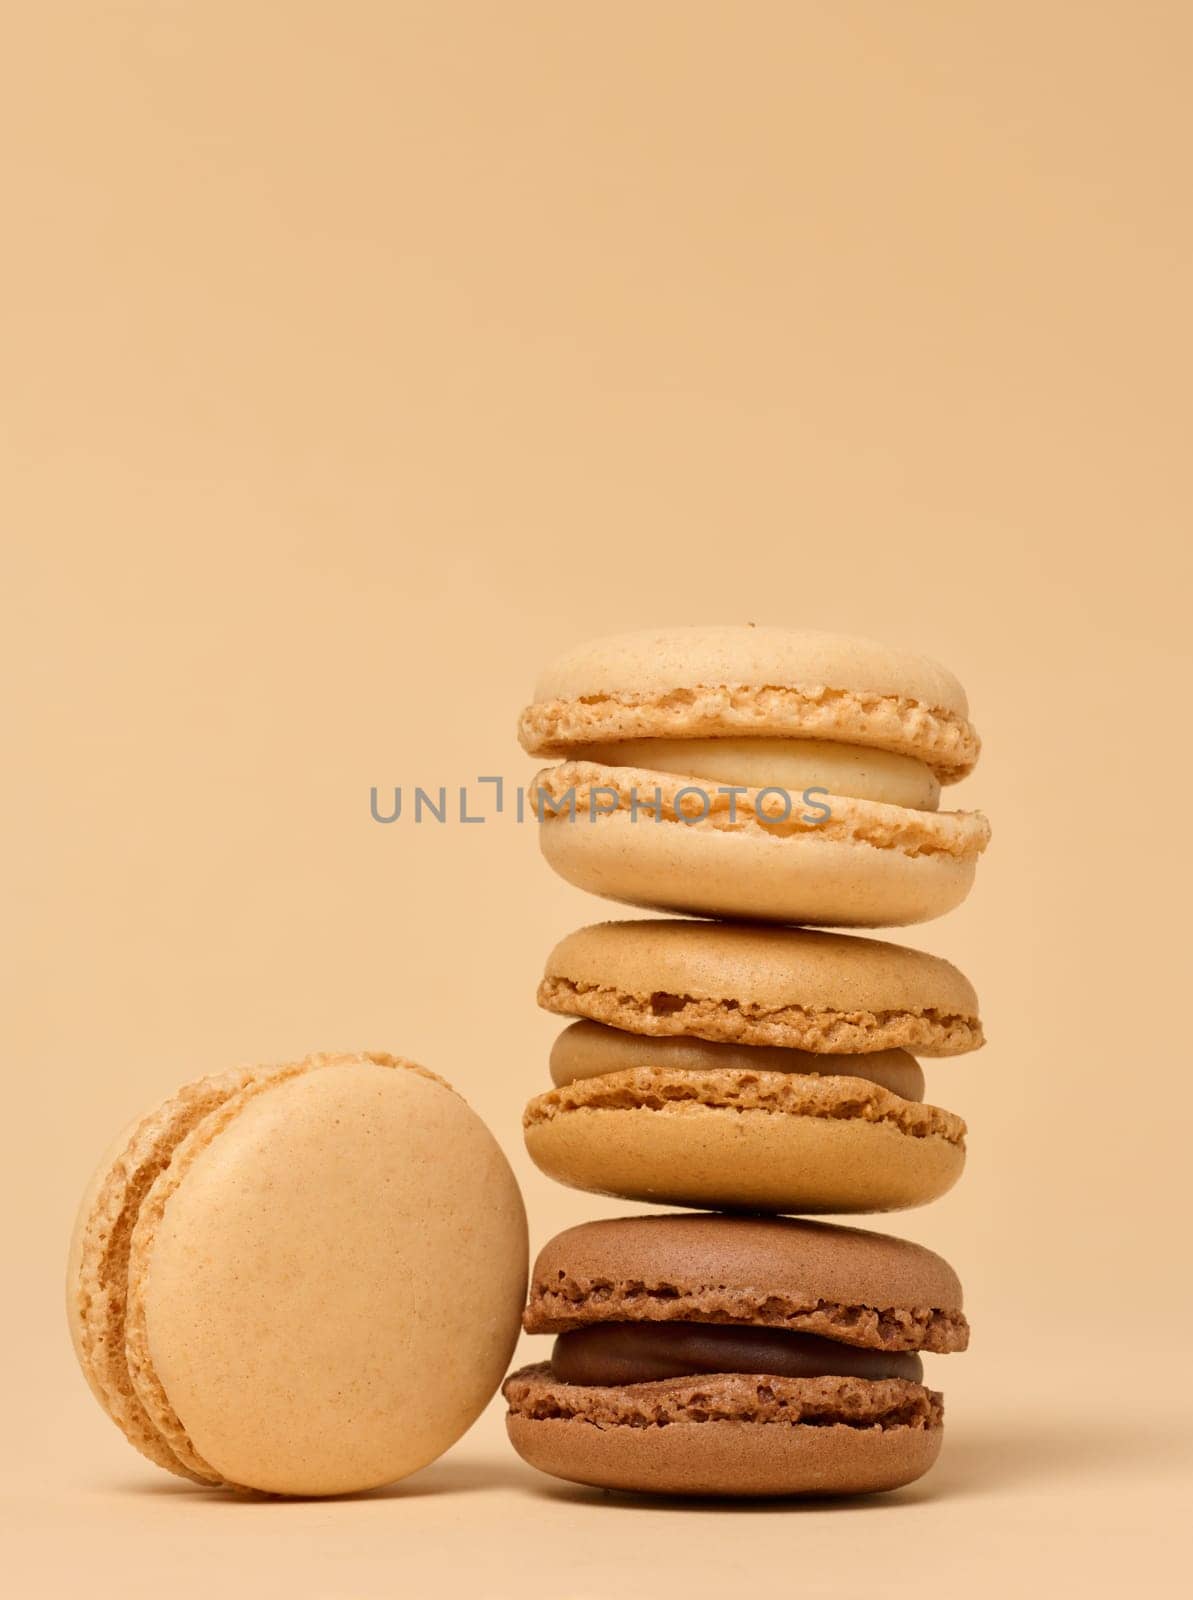 Stack of chocolate macarons on beige background by ndanko